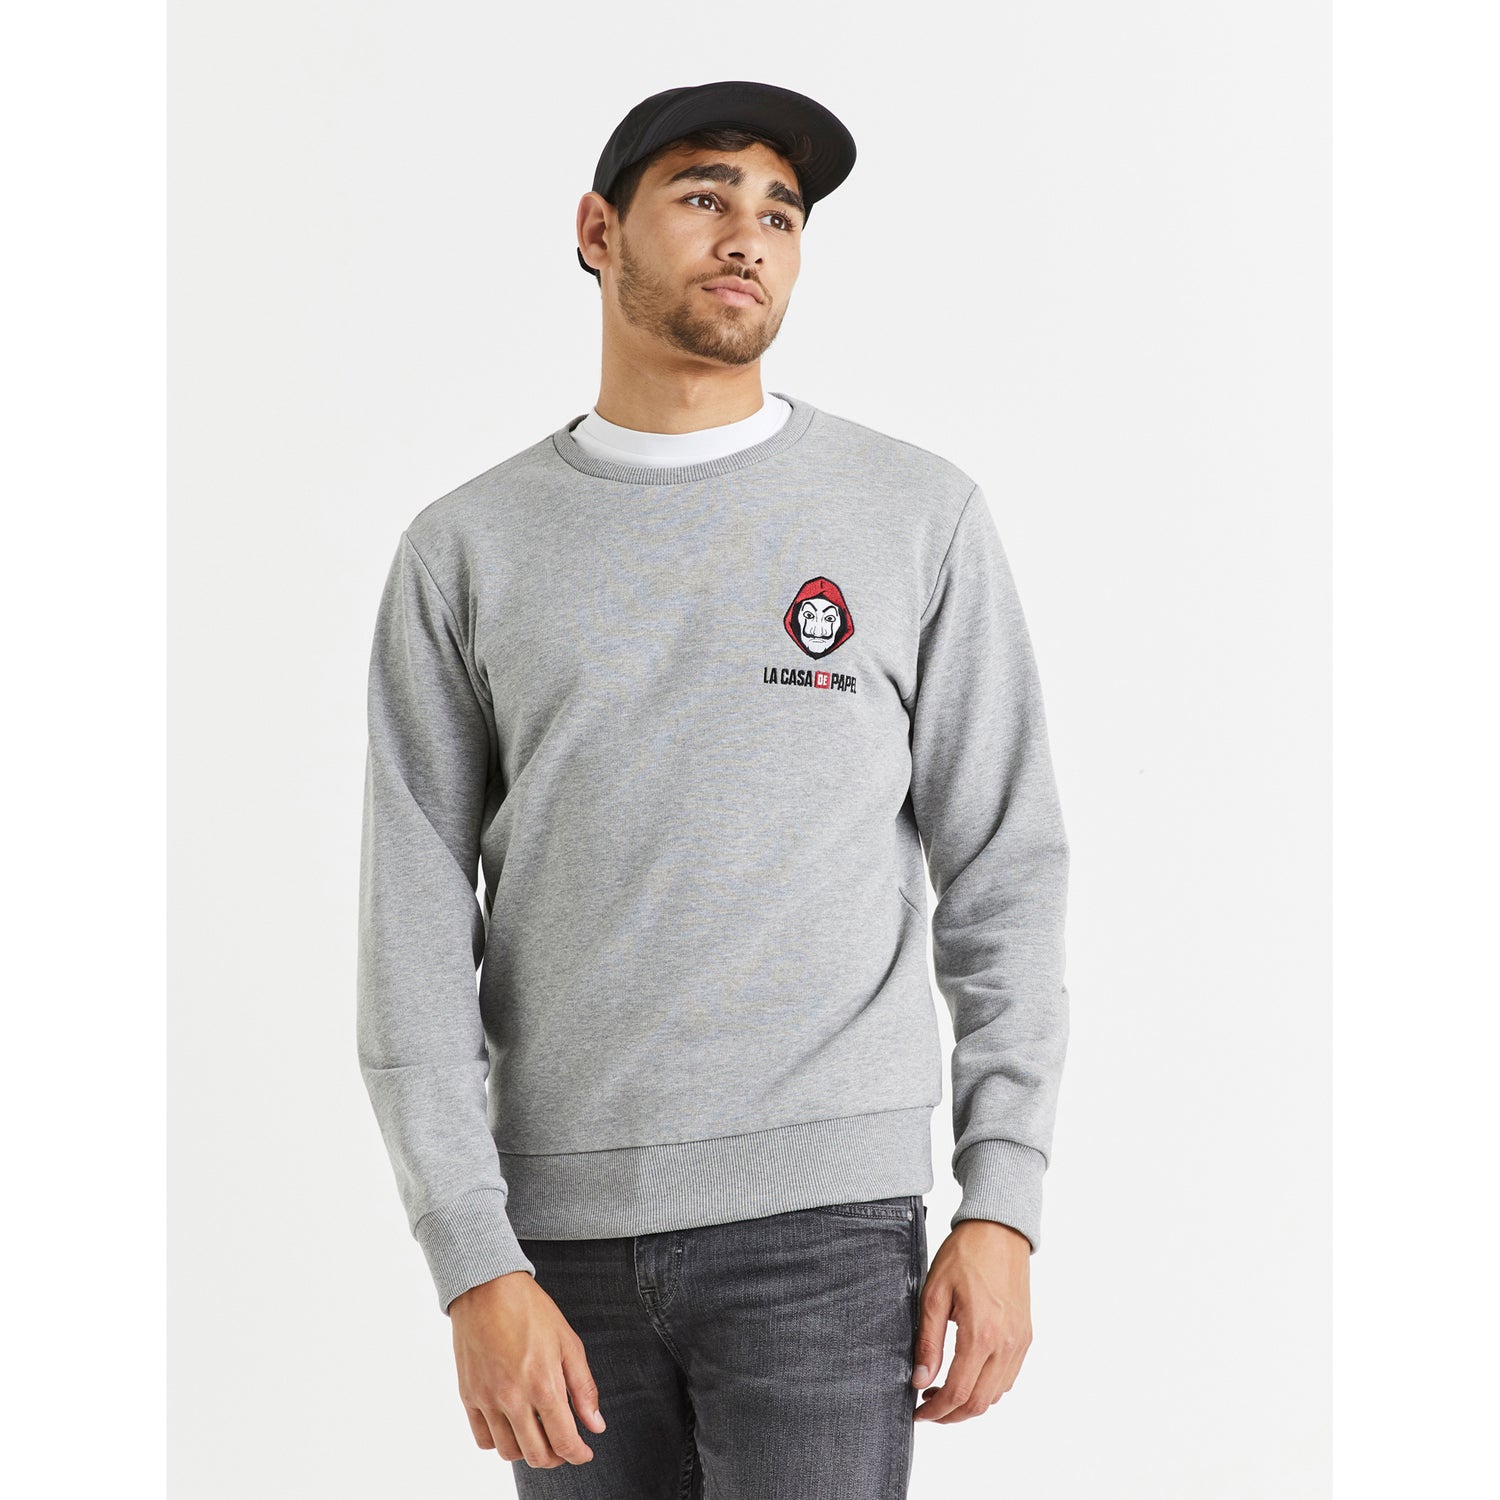 Money Heist - Grey Printed Cotton Hooded Sweatshirt (LVESPISW02)